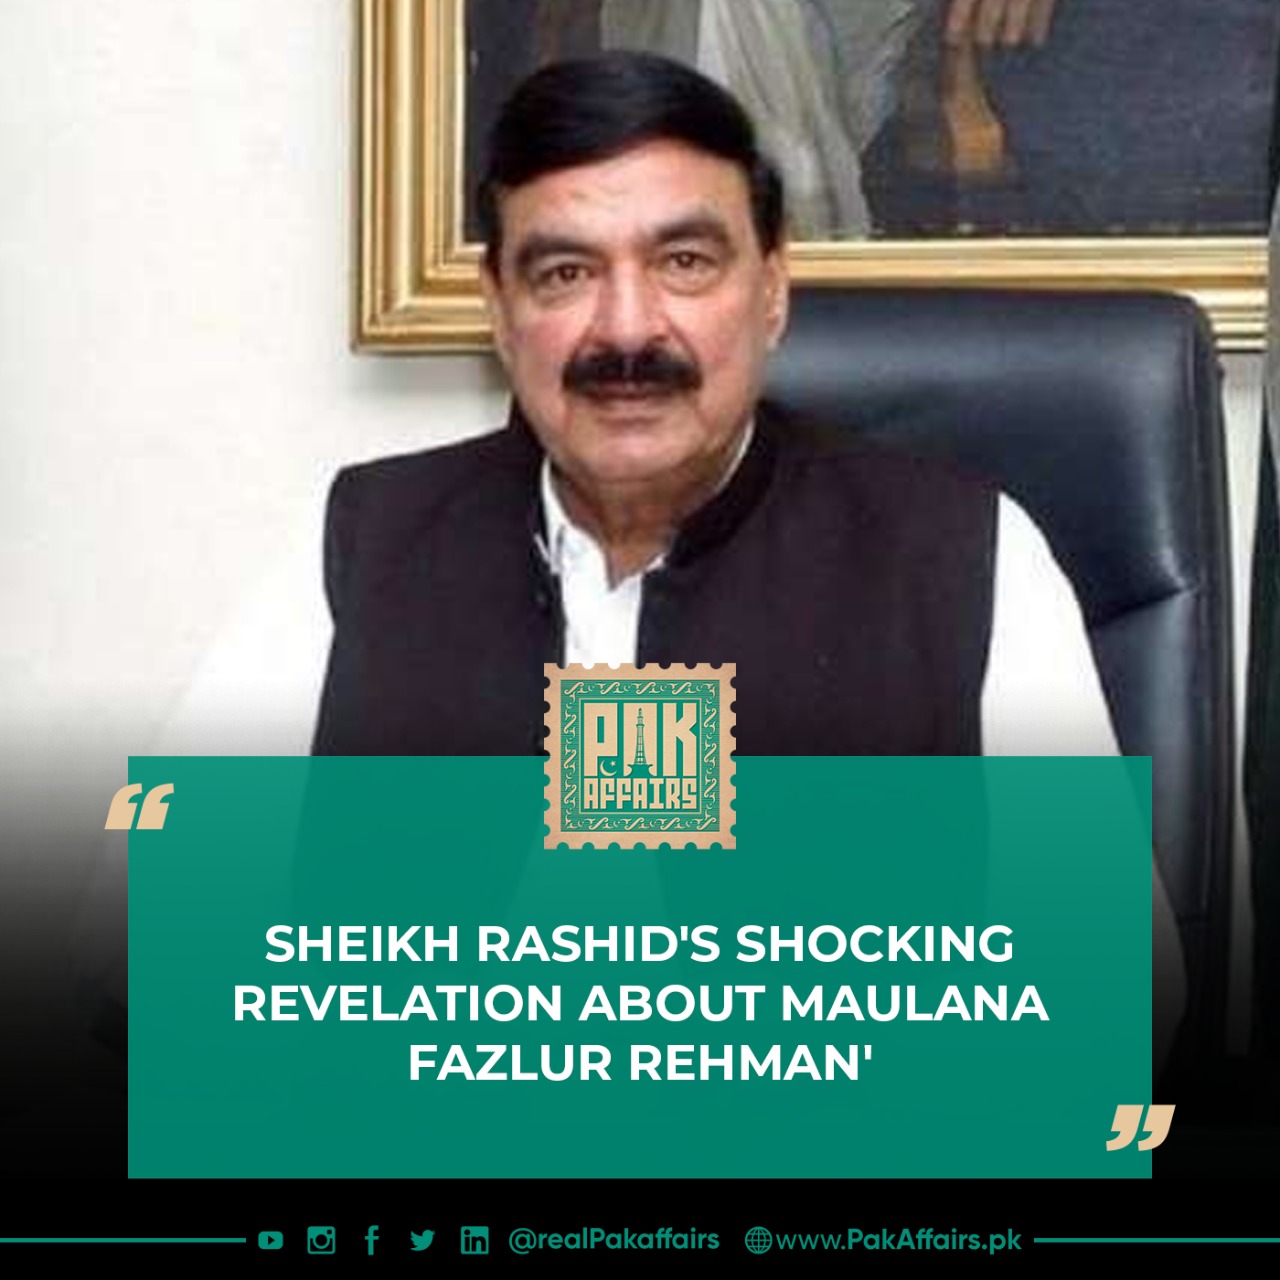 Sheikh Rashid's shocking revelation about Maulana Fazlur Rehman'